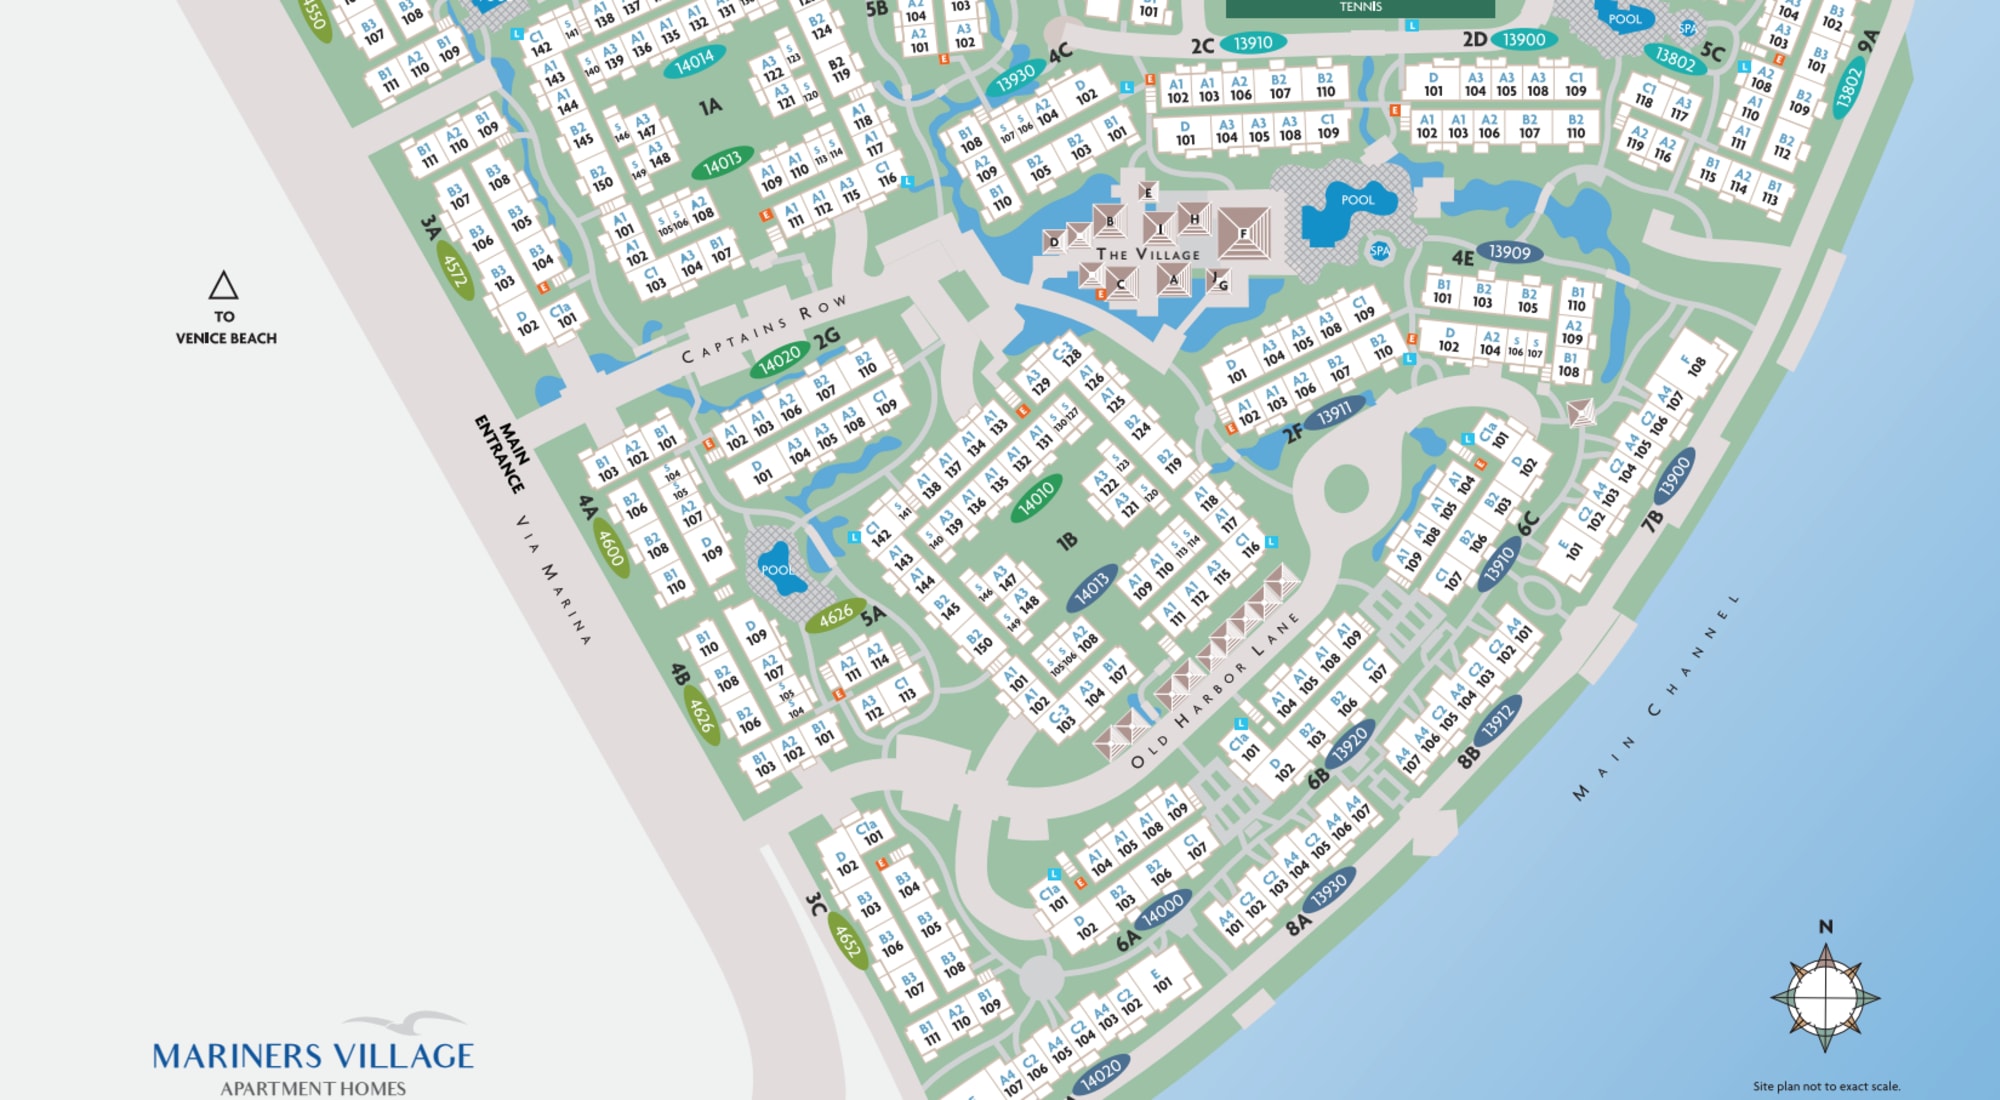 Site plan for Mariners Village in Marina del Rey, California